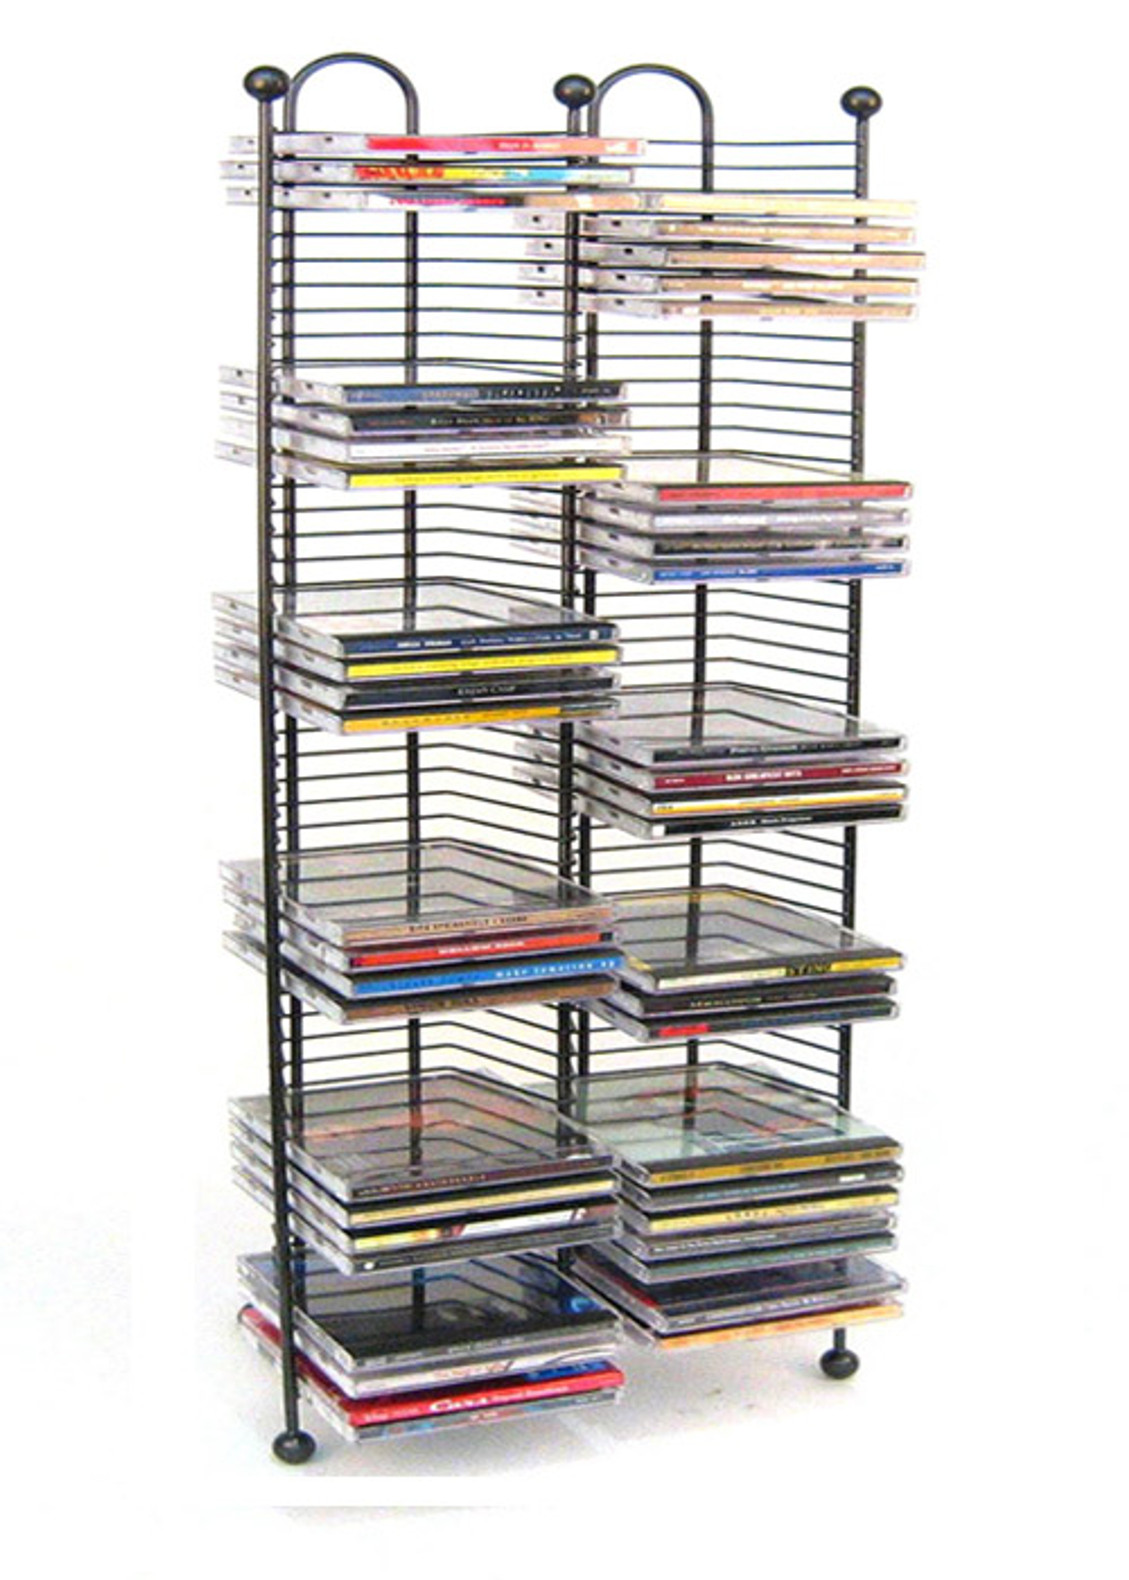 Blank CDs 100 count tower media lock case holder storage music drives TDK  vtg